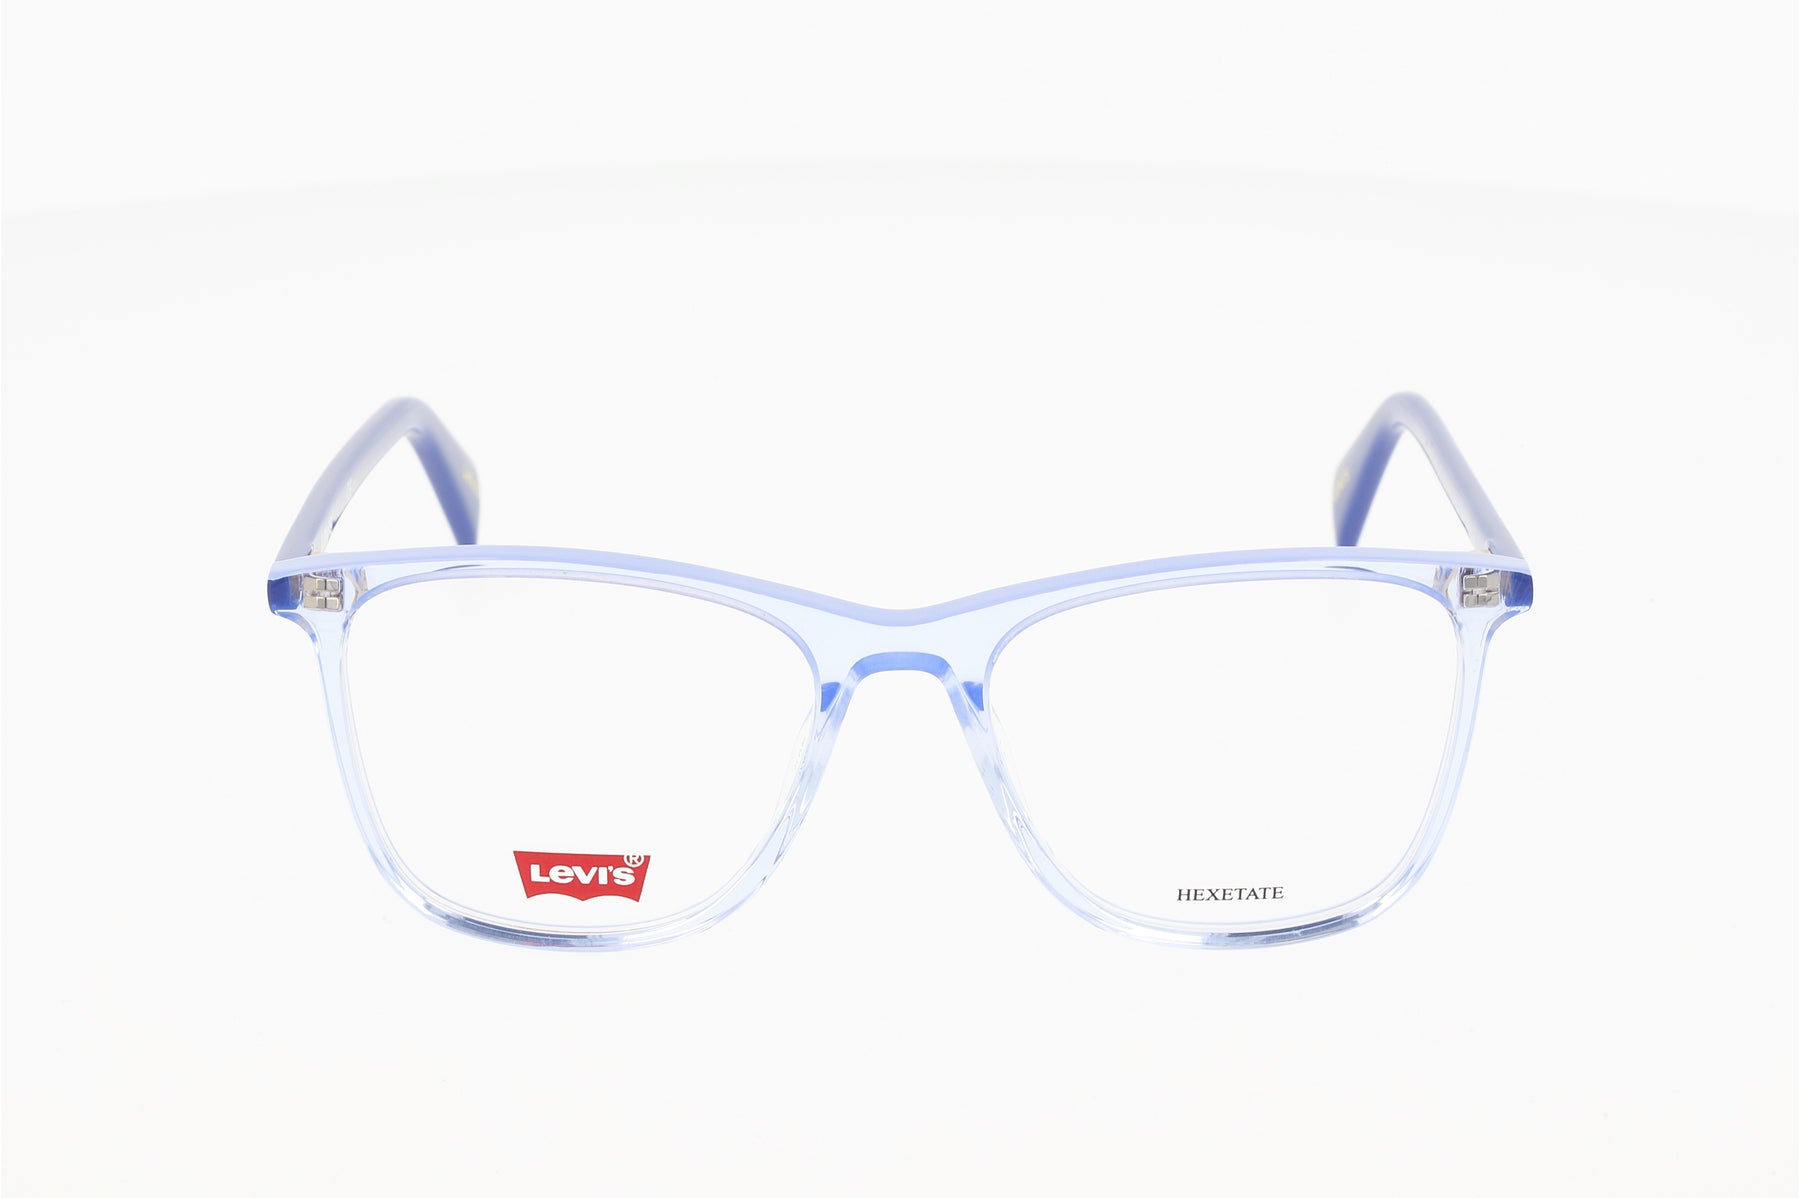 Vista-1 - Gafas oftálmicas Levis LV1003 Mujer Color Azul